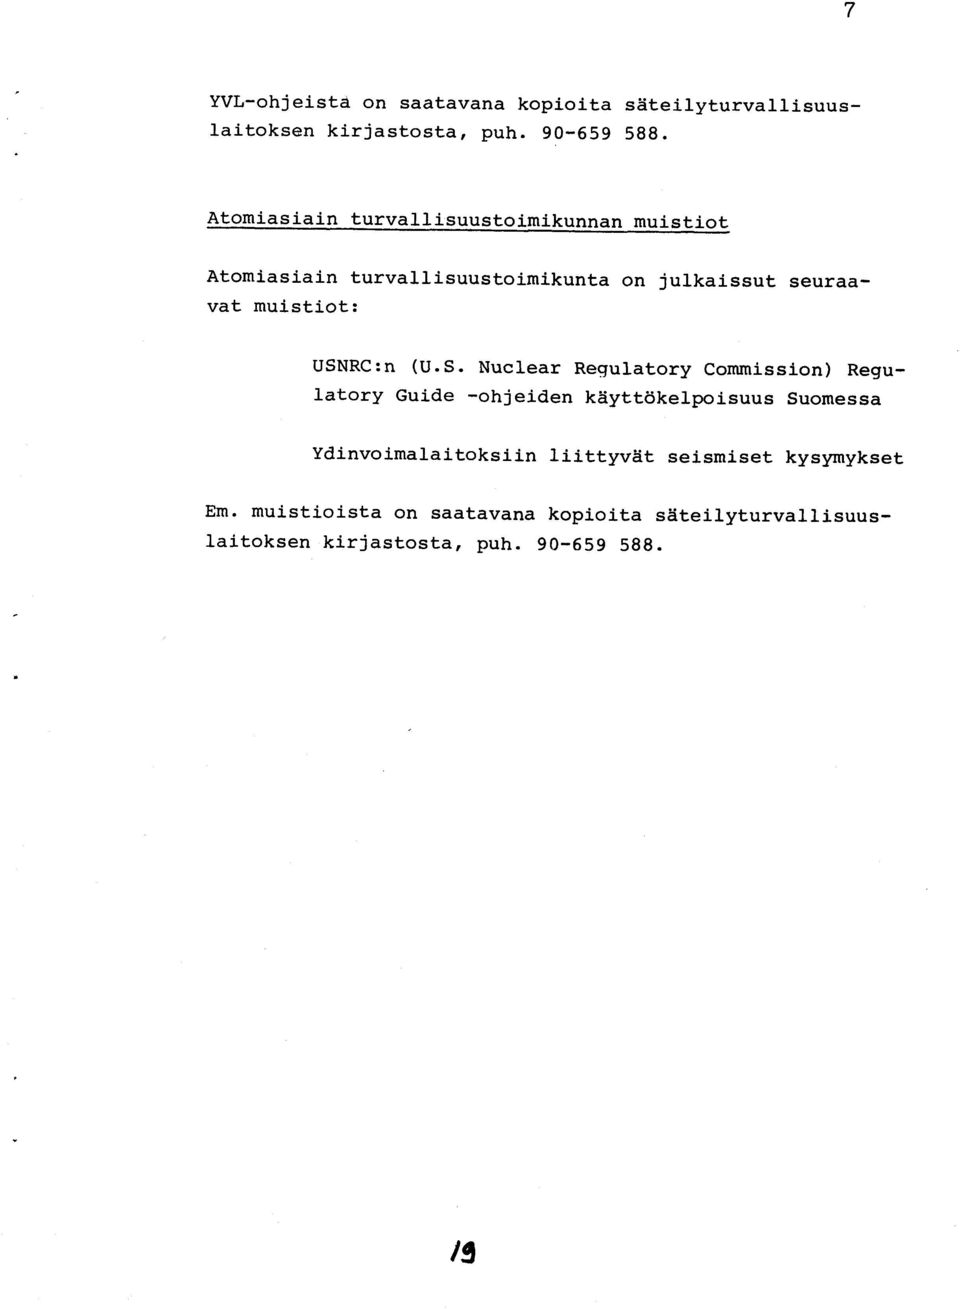 USNRC:n (U.S. Nuclear Regulatory Commisslon) Regulatory Guide -ohjeiden kdytt6kelpoisuus suomessa